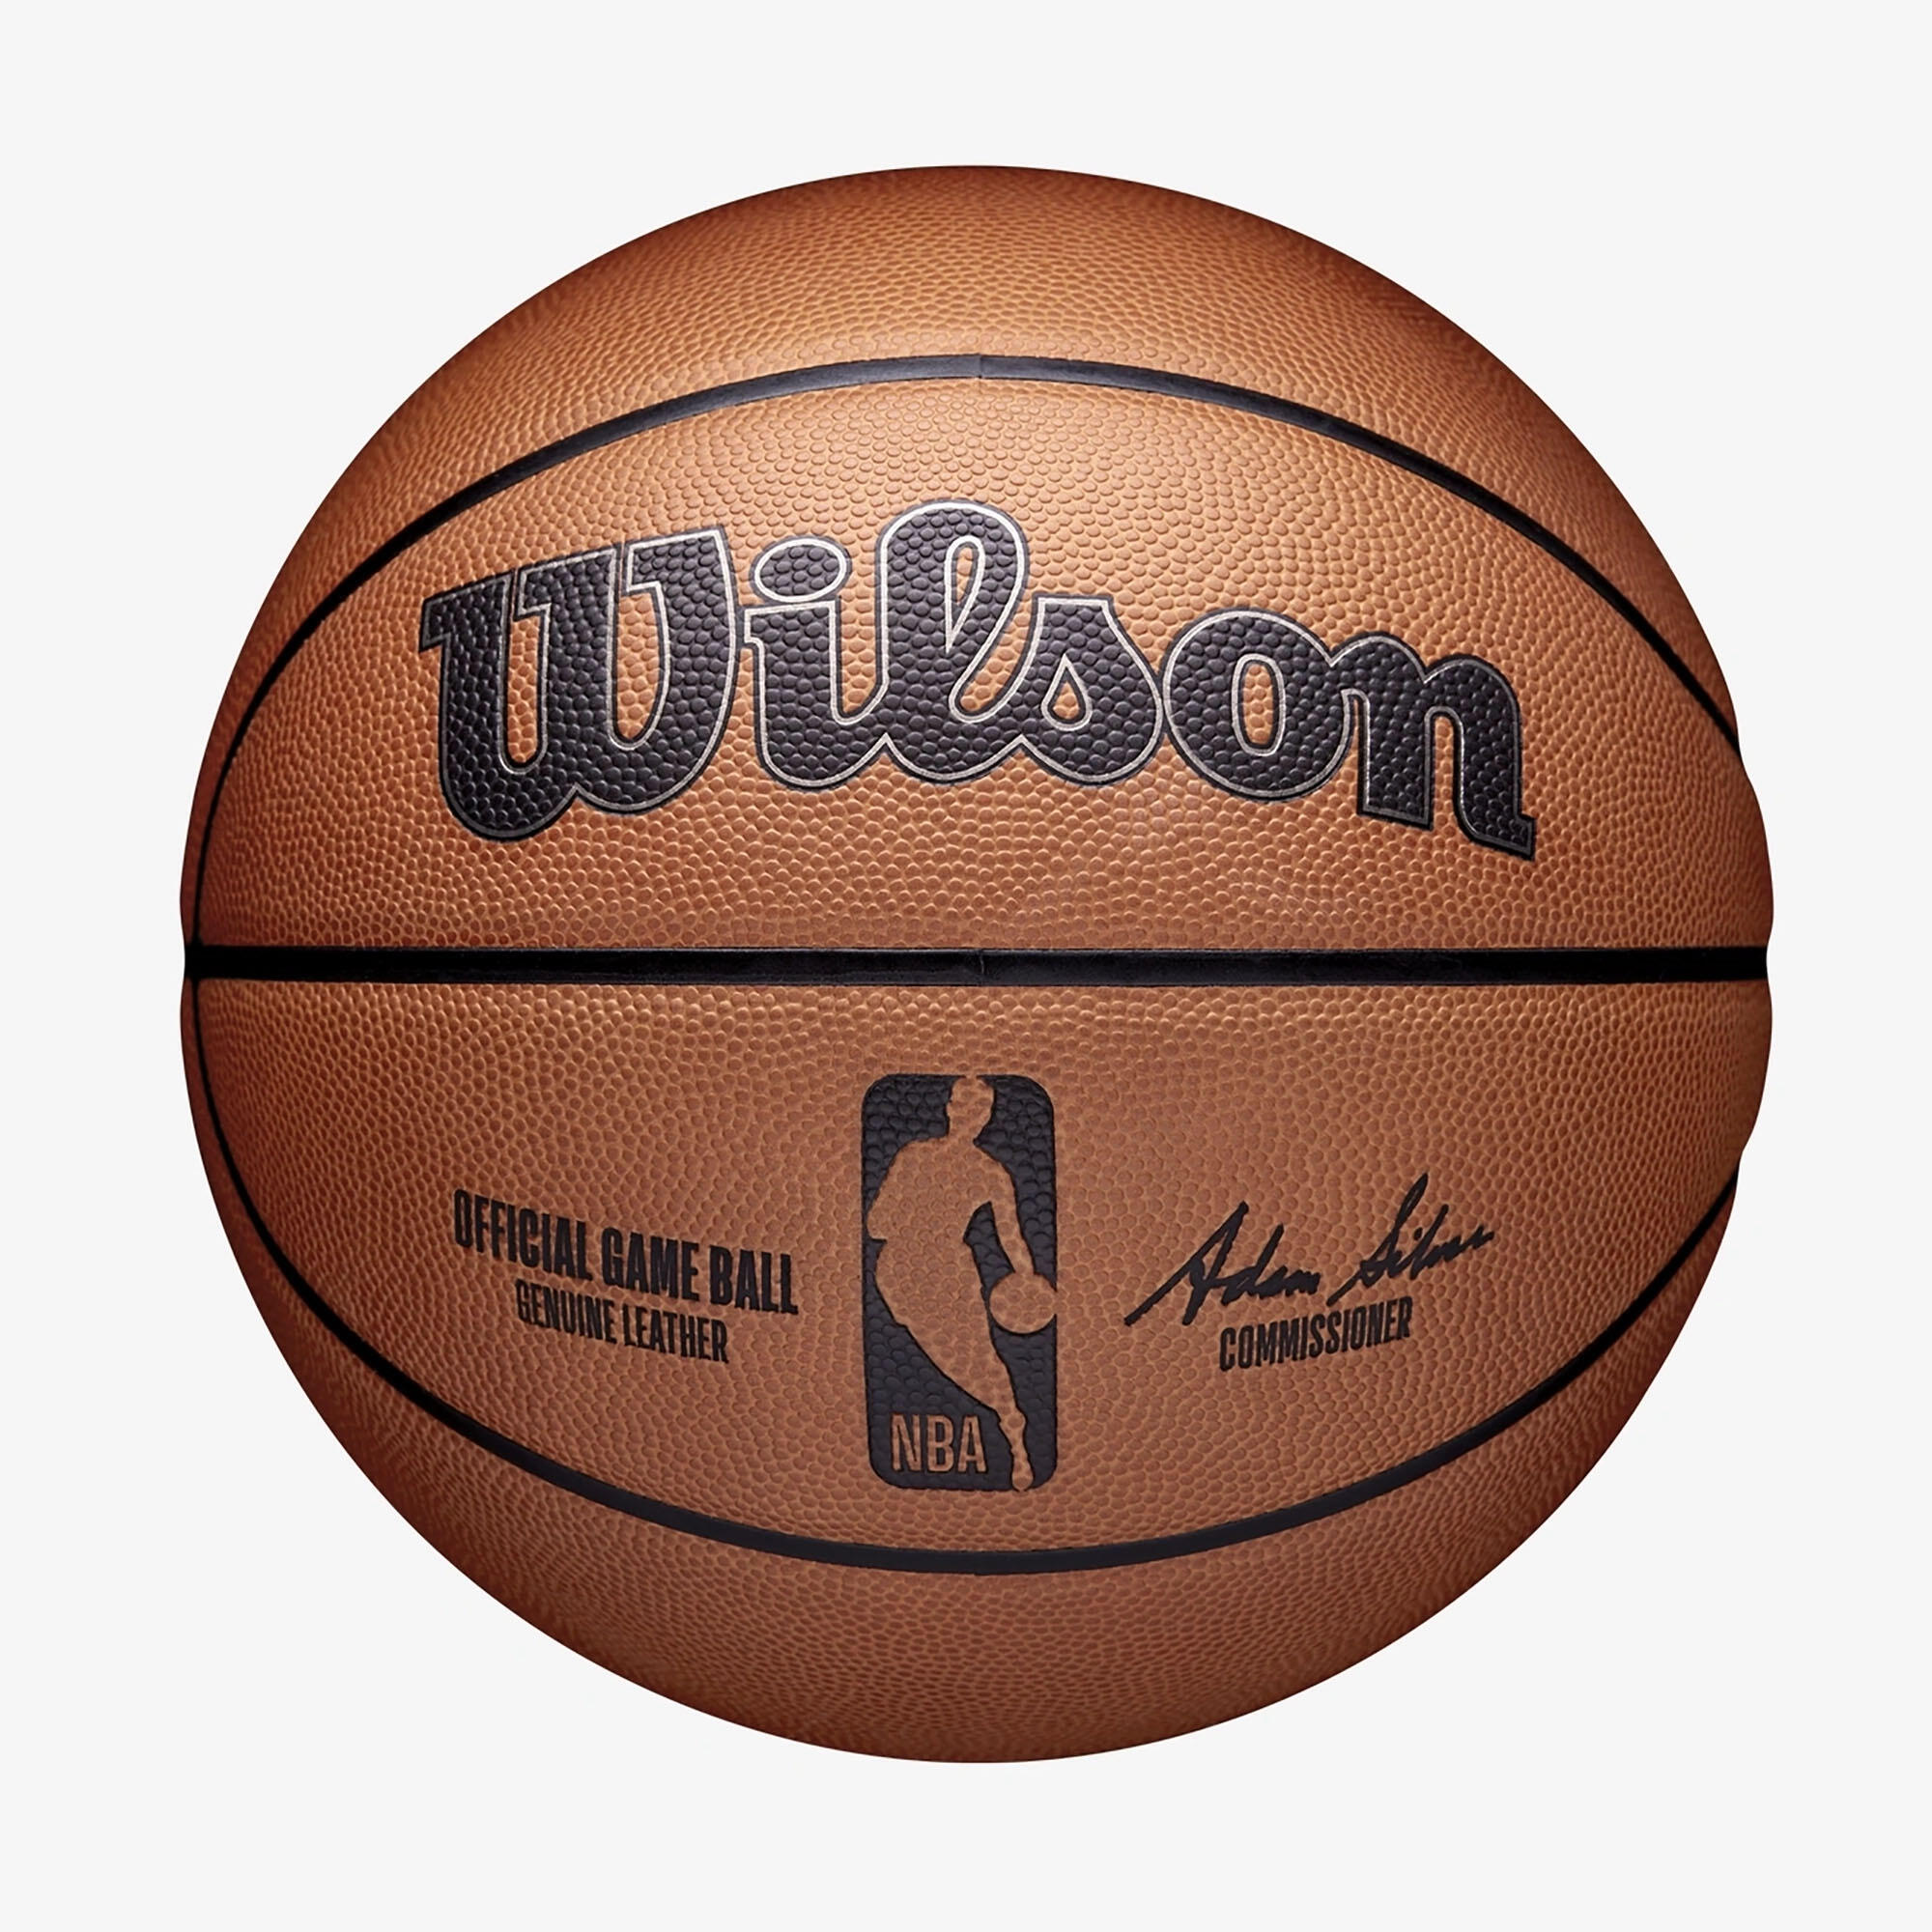 Basketball Size 7 NBA Official Game Ball - Brown 1/5